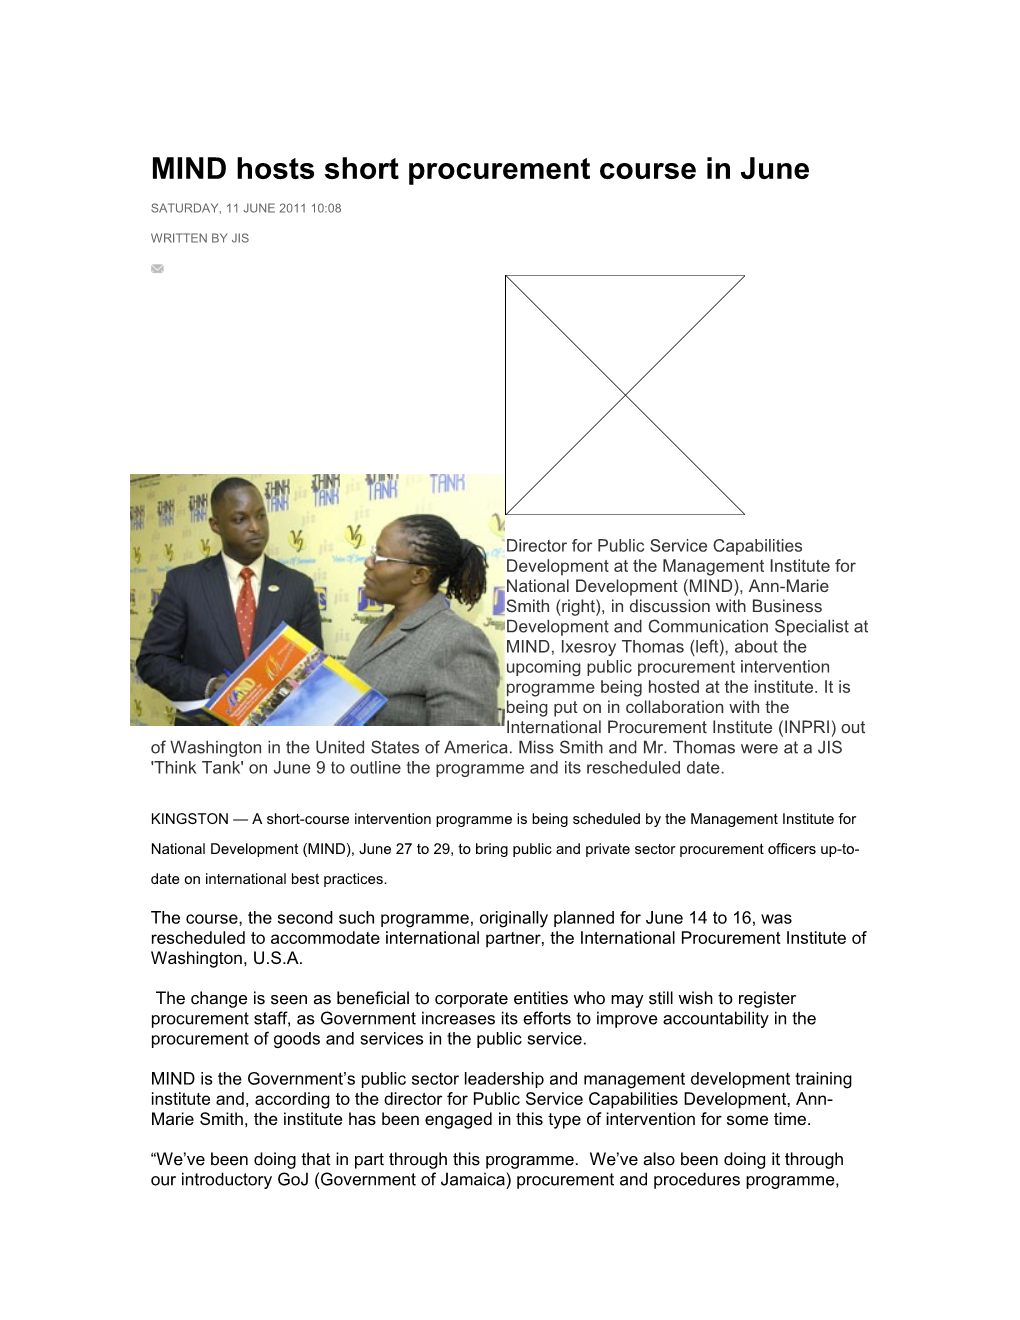 MIND Hosts Short Procurement Course in June